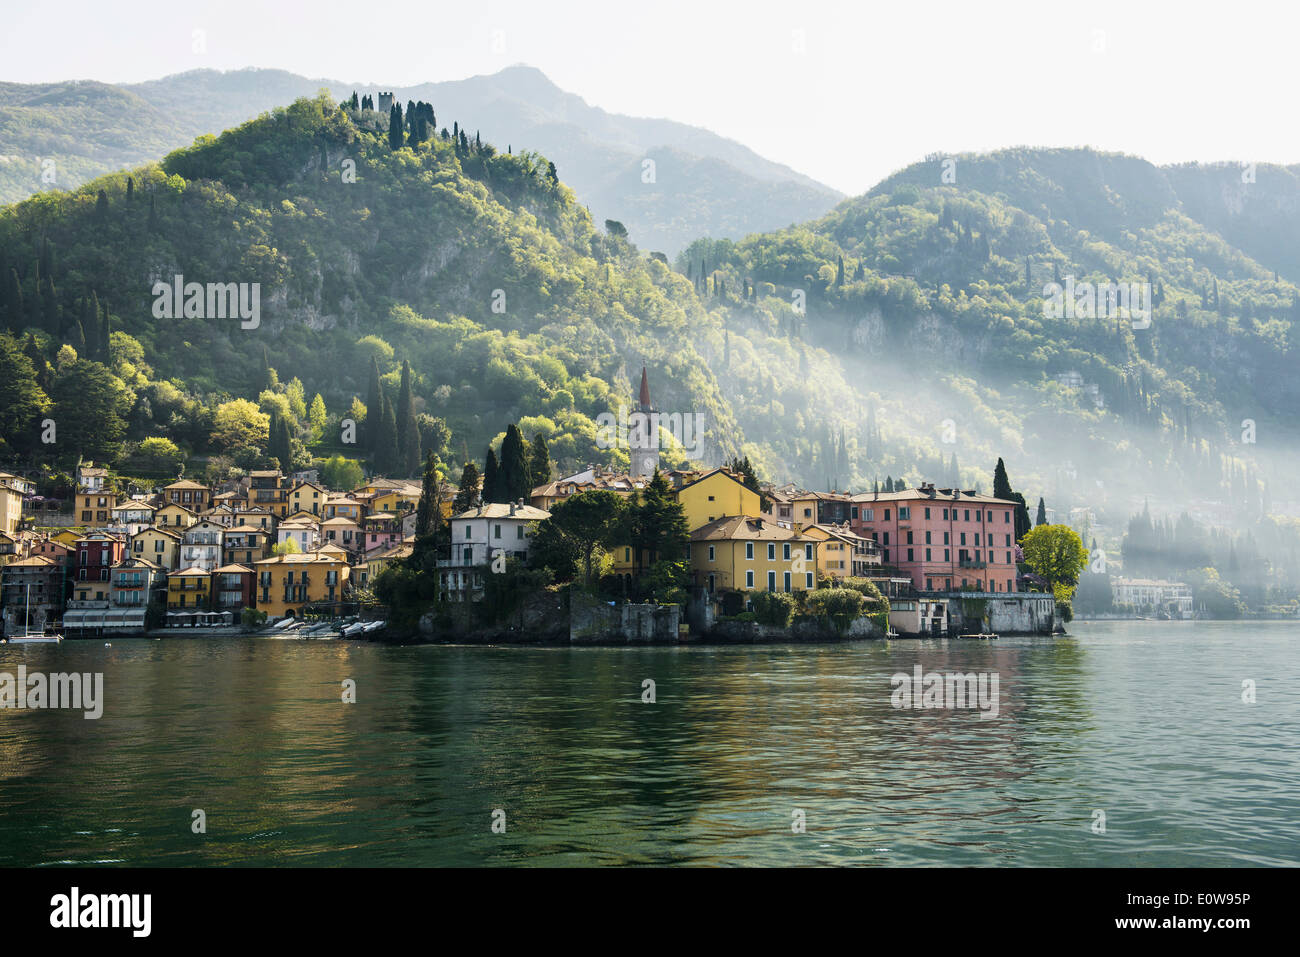 Village on the lake, Varenna, Lake Como, Lago di Como, Lecco province, Lombardy, Italy Stock Photo